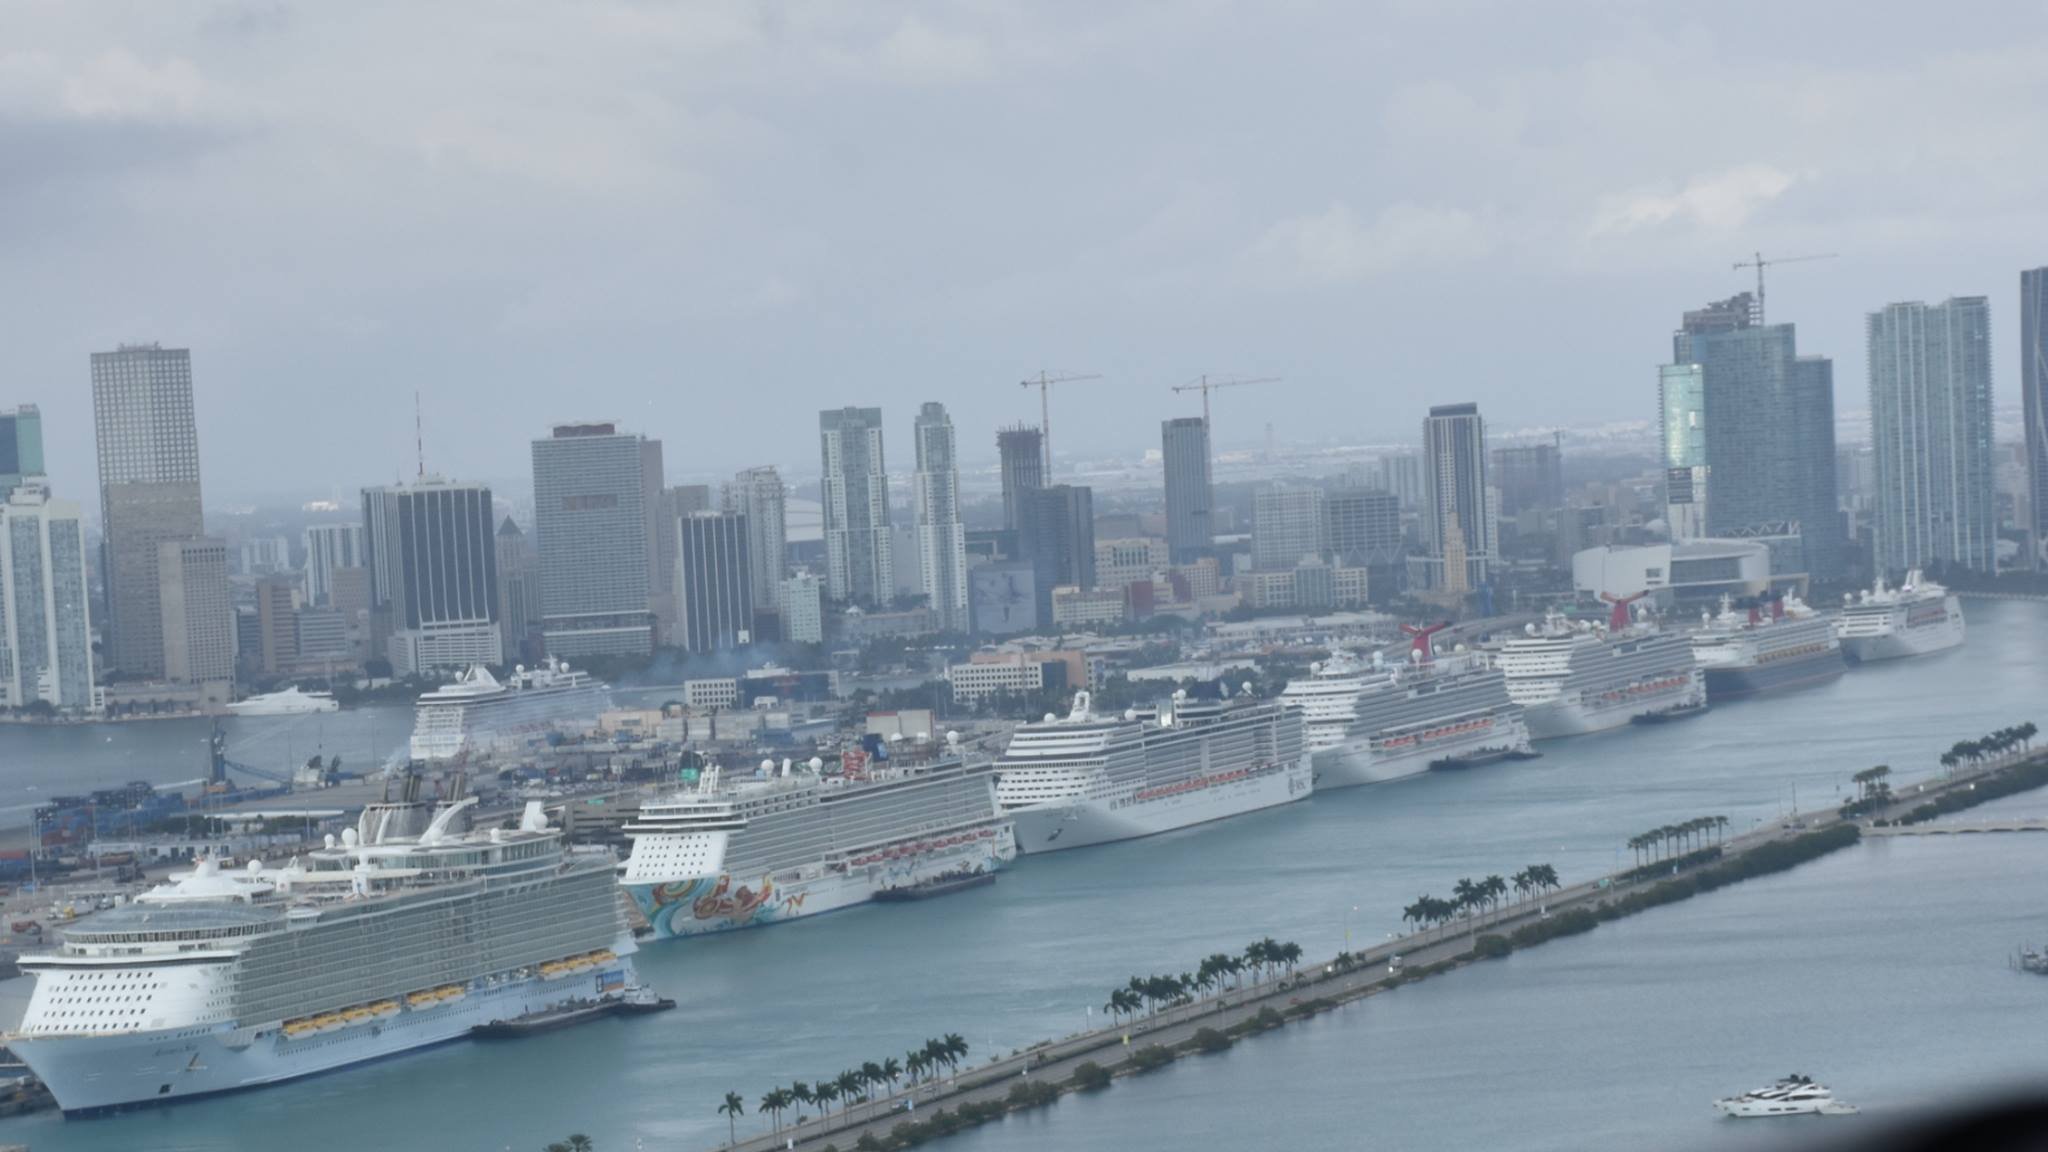 PortMiami Prepares for Record 52,000 Cruise Passengers on Sunday - Royal Caribbean News and Rumors - Royal Caribbean Blog